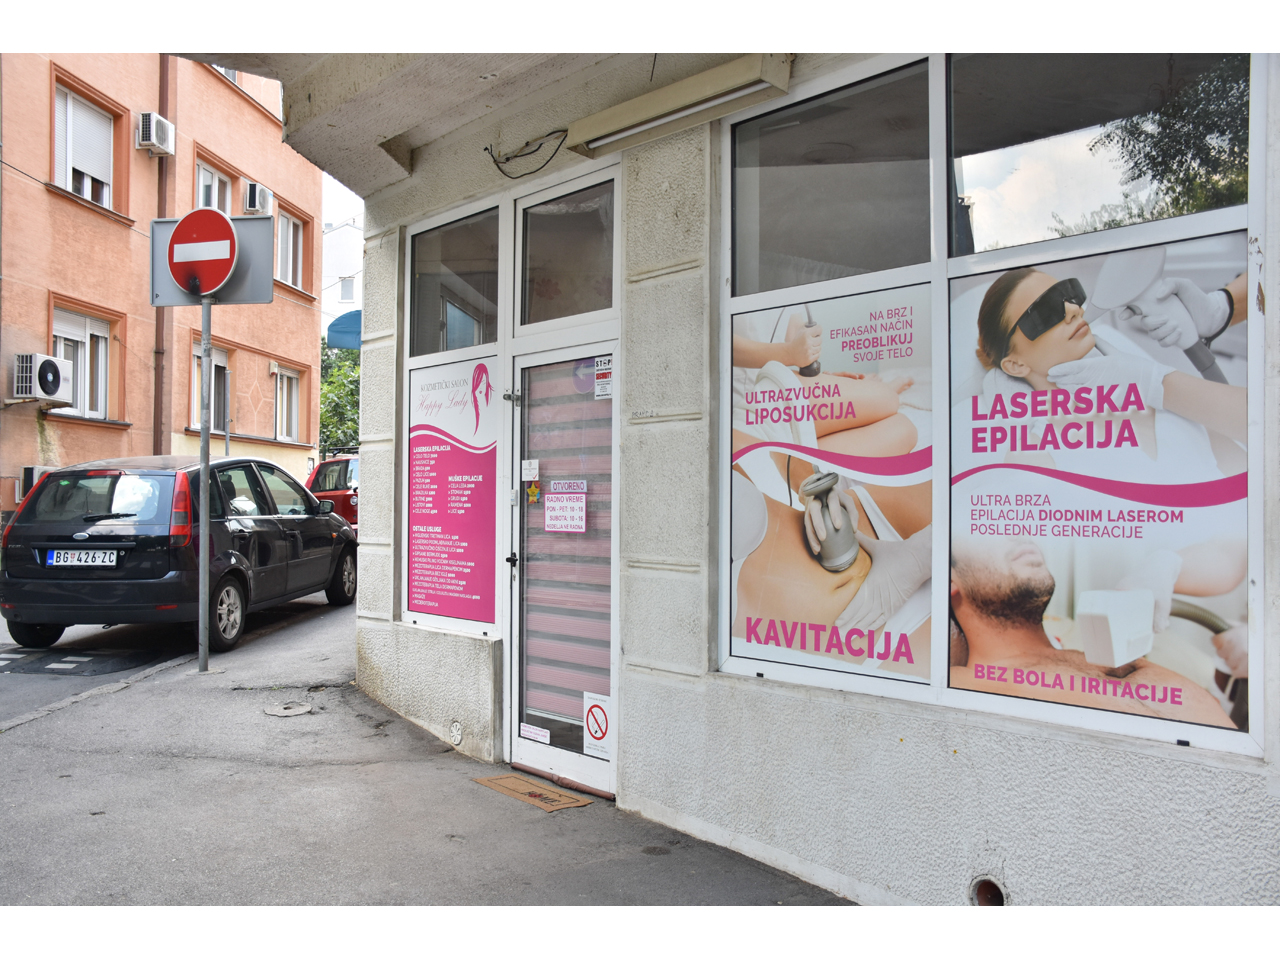 LASER CENTER HAPPY LADY - LASER EPILATION Beauty salons Belgrade - Photo 1